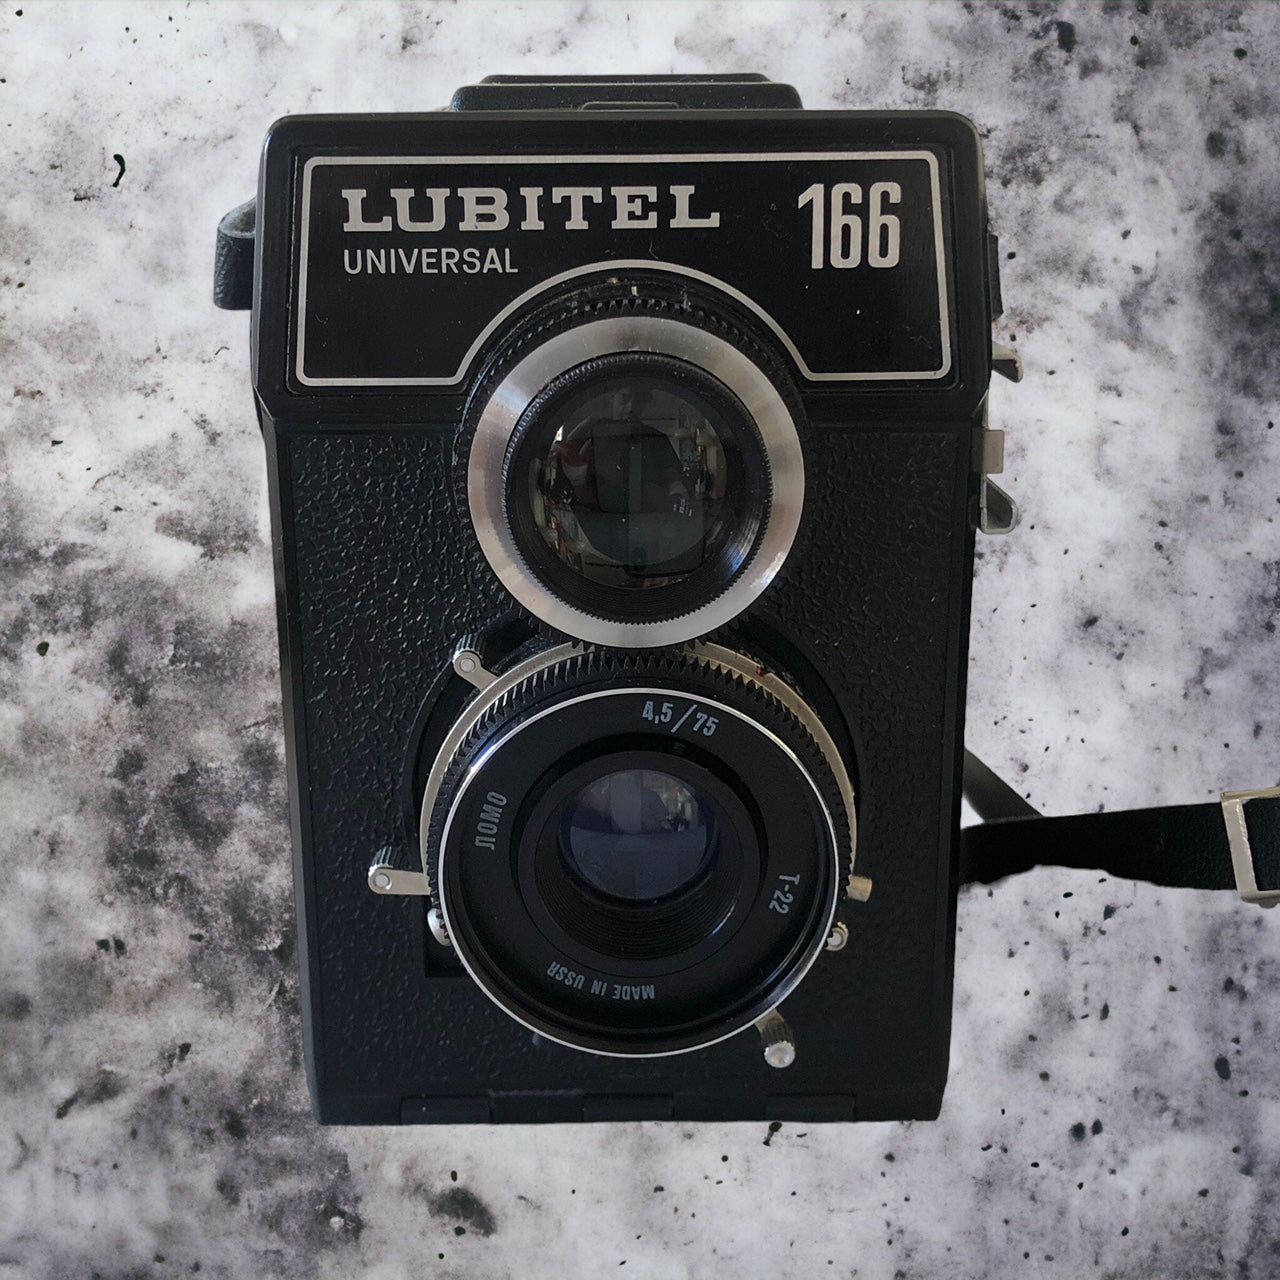 Lomo Lubitel 166 Universal Camera